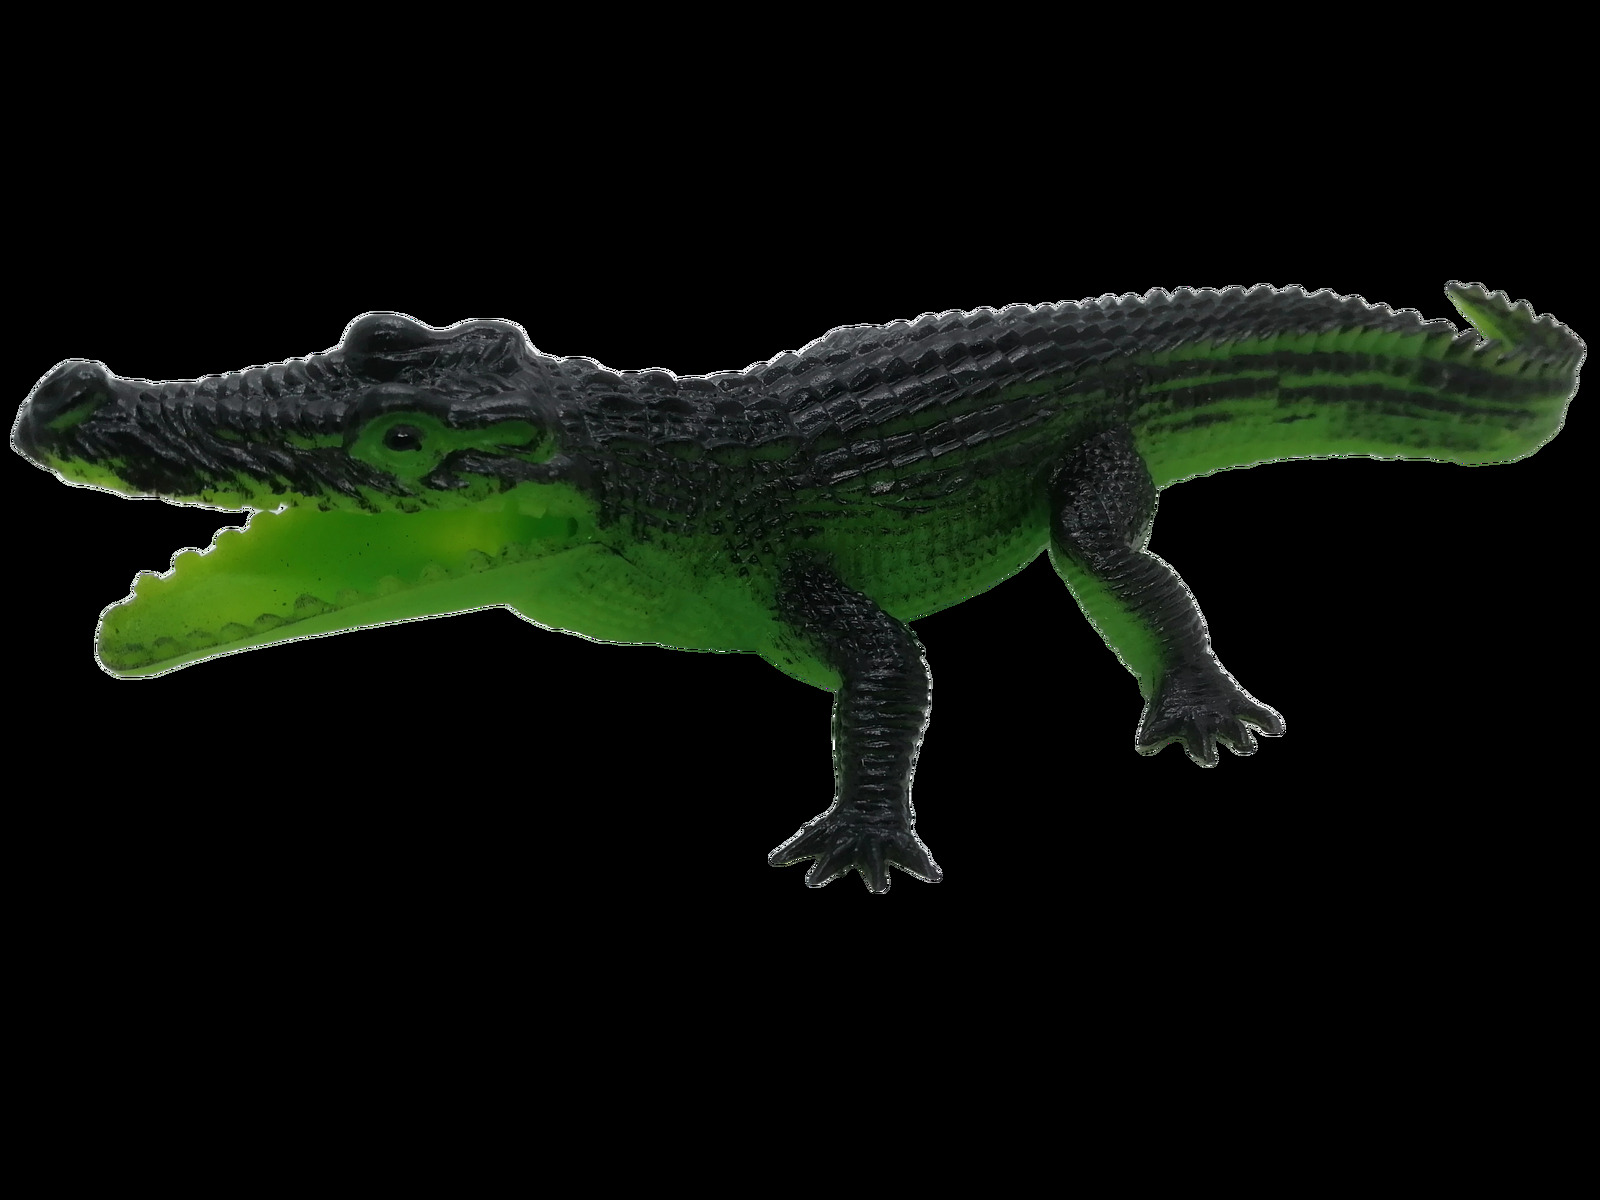 Crocodile Cake stock photo. Image of green, alligator - 10492792